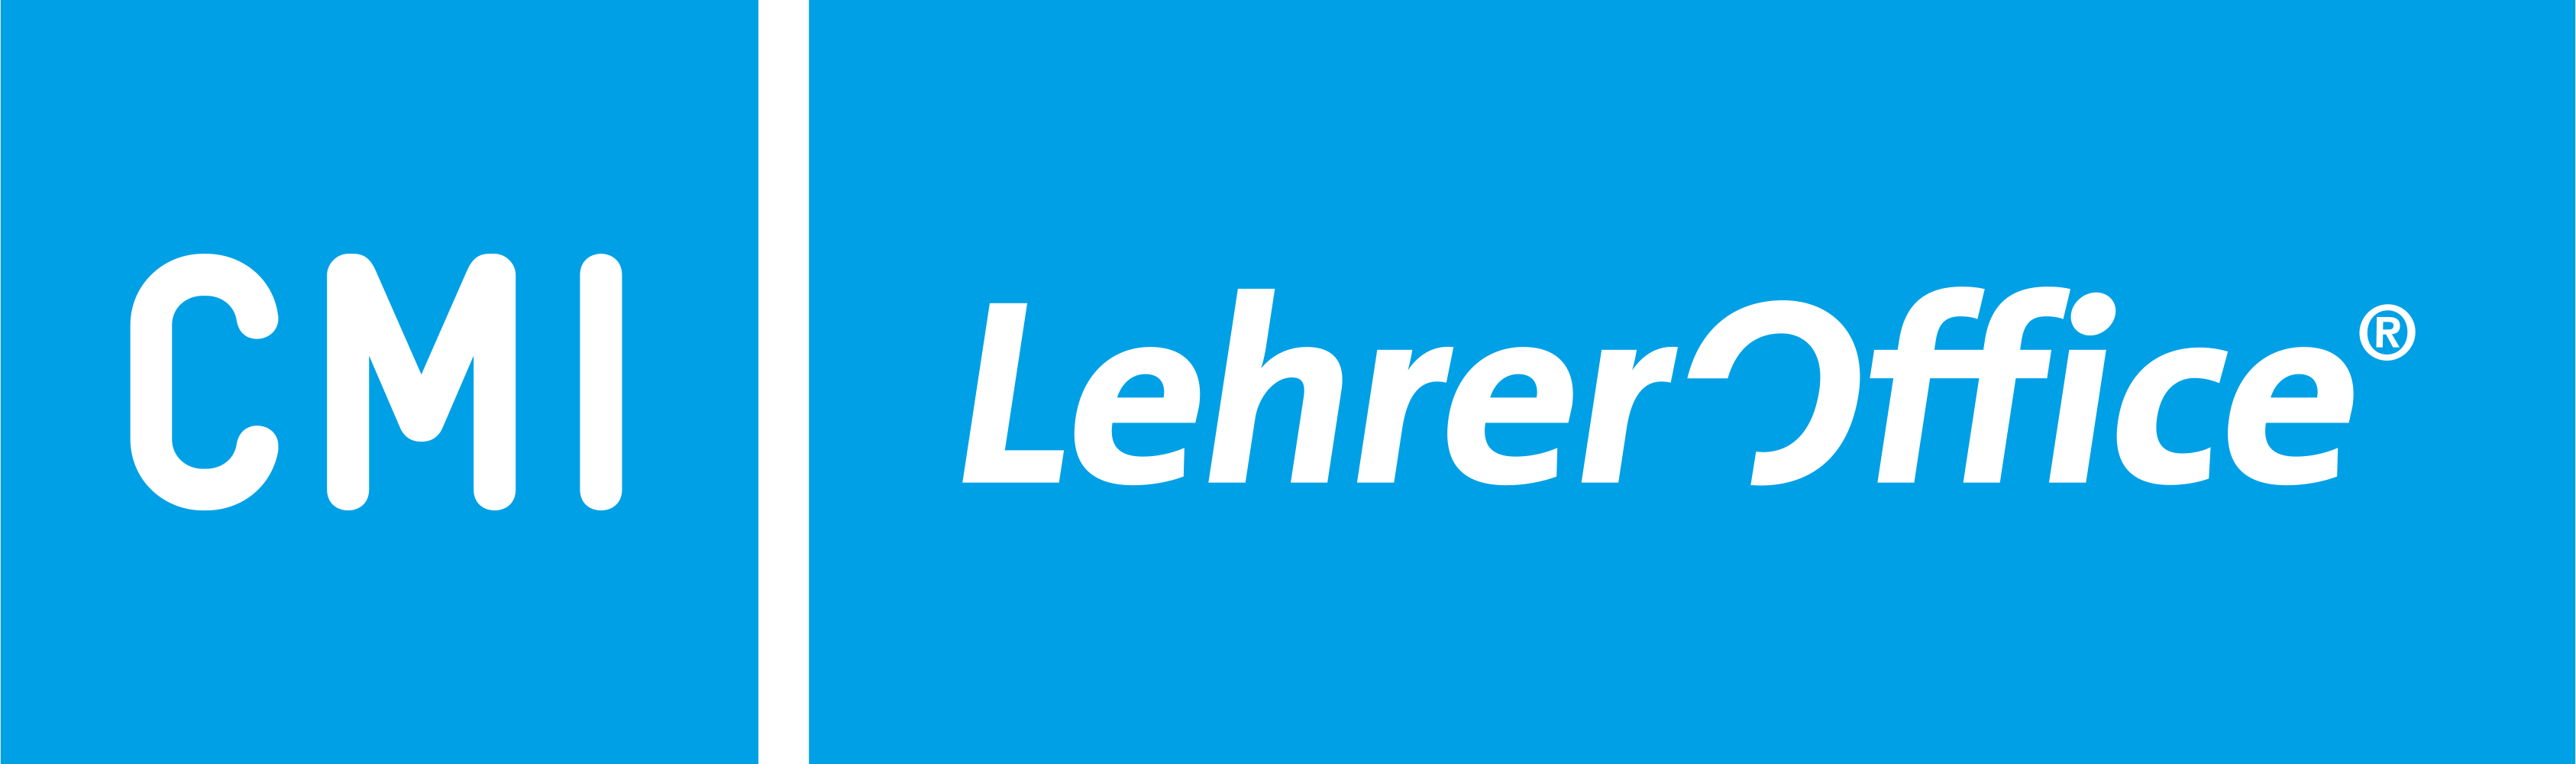 CMI LehrerOffice Logo